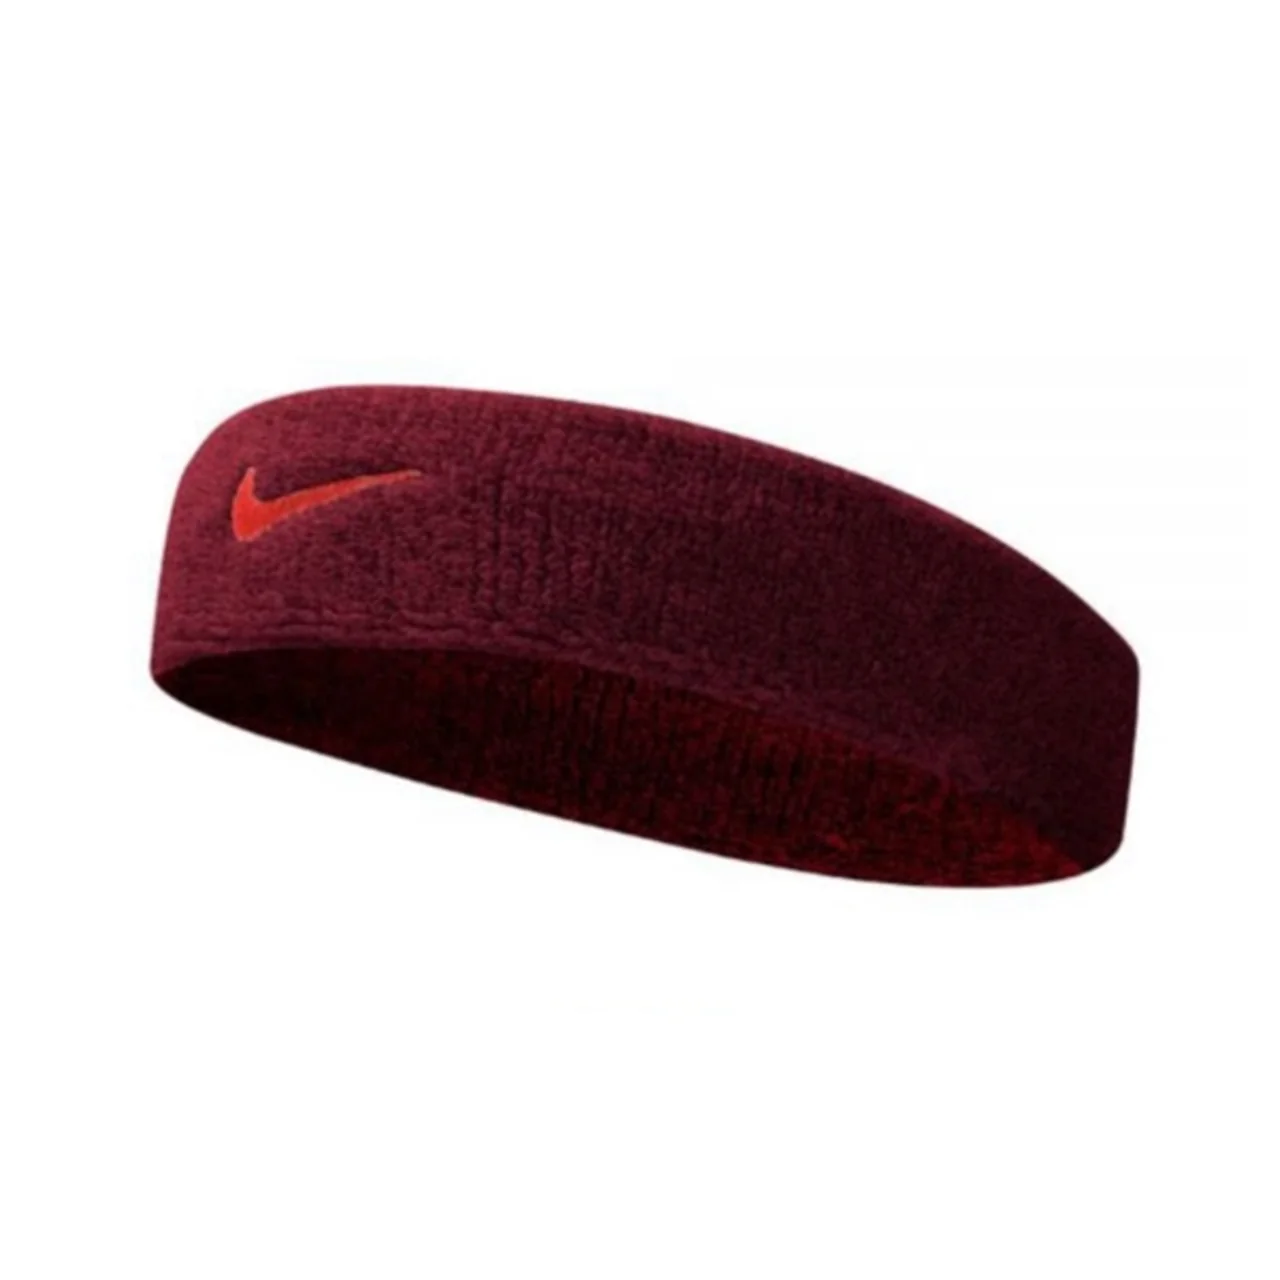 Nike Headband Wine Red/Orange